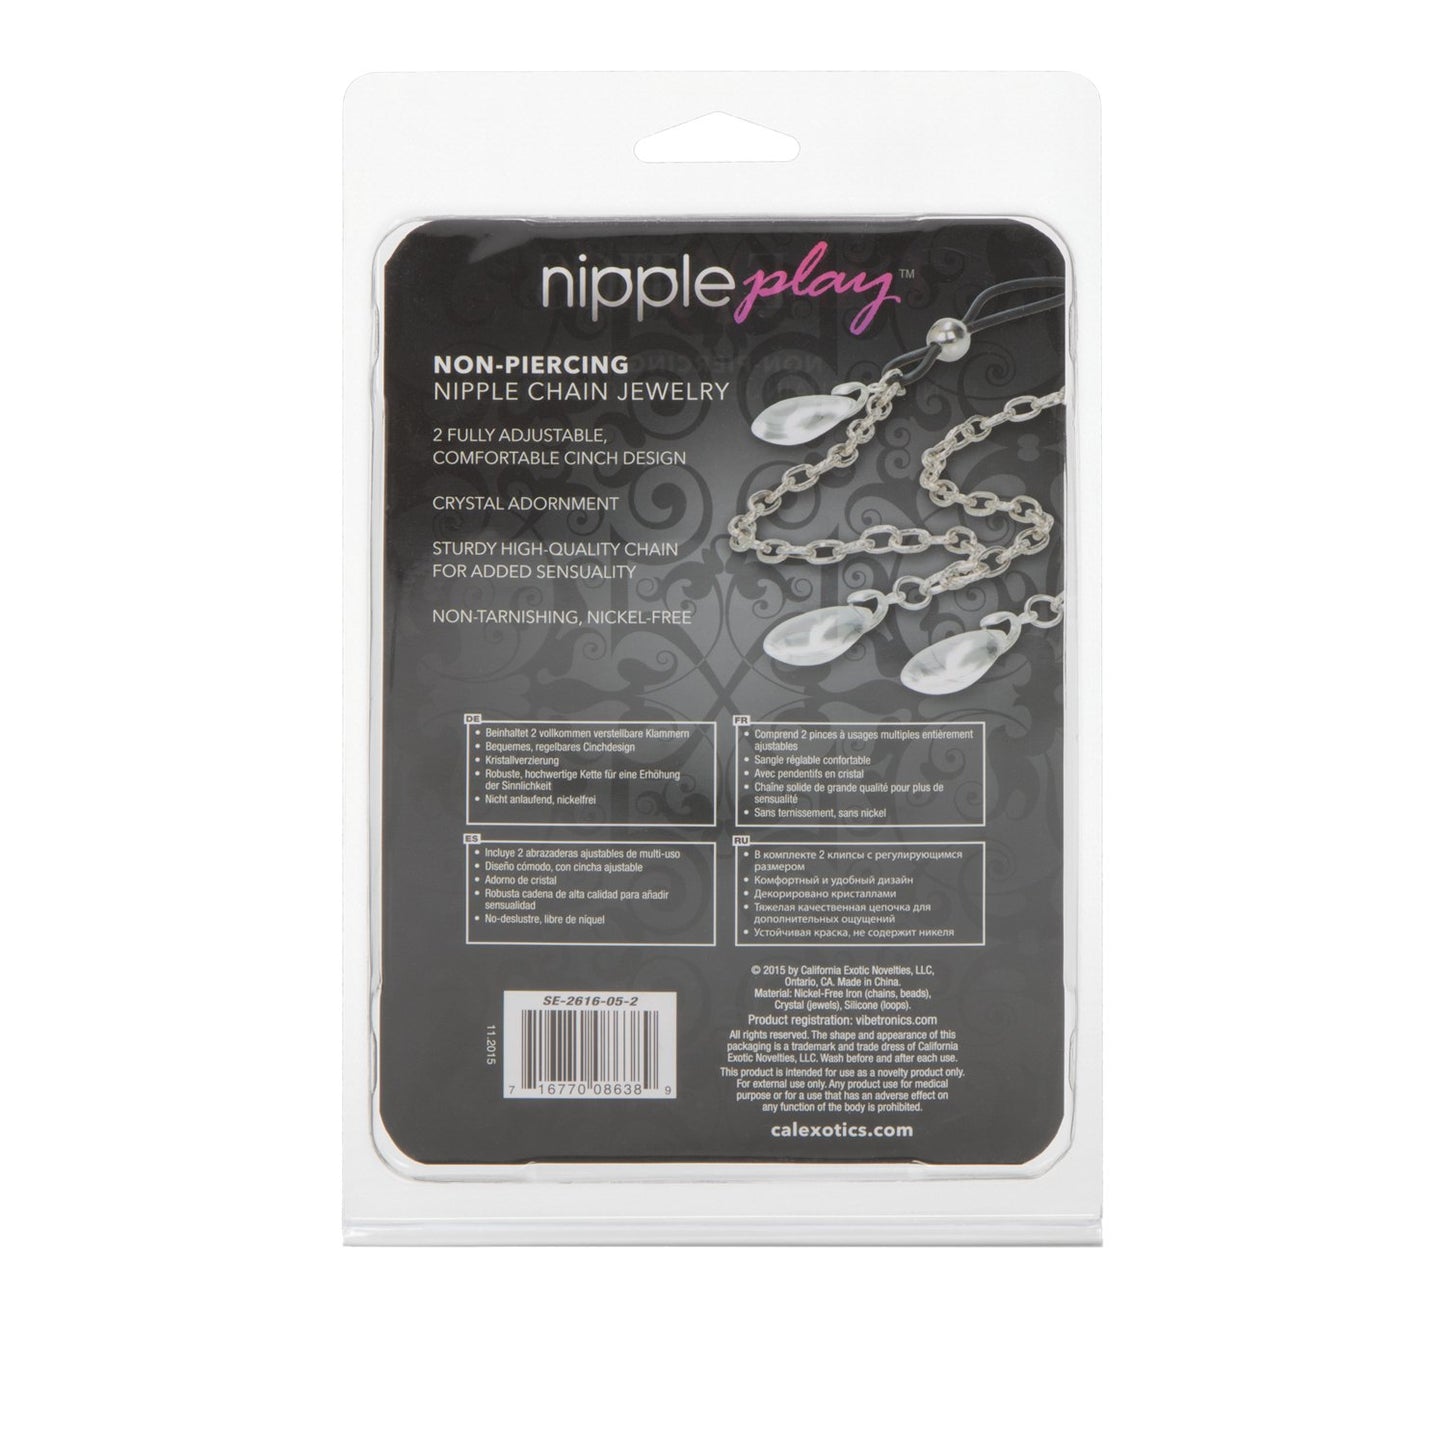 Nipple Play Non-Piercing Nipple Chain Jewelry